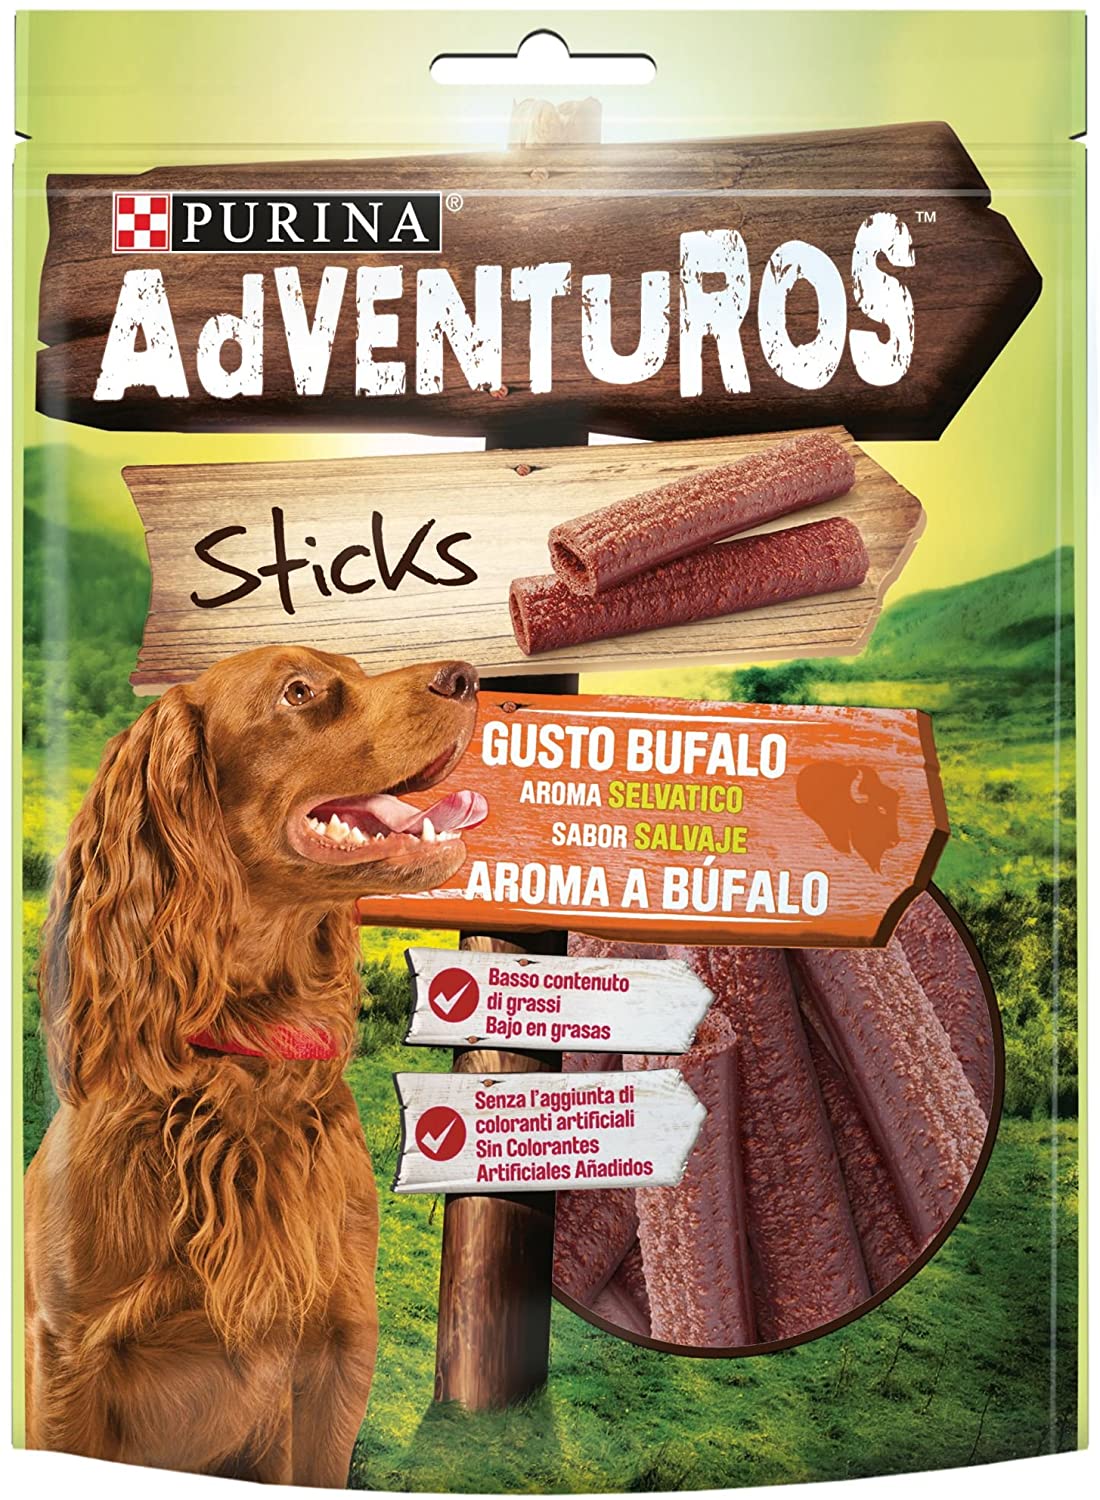  Purina Adventuros Sticks golosinas y chuches natural para perros 6 x 120 g 